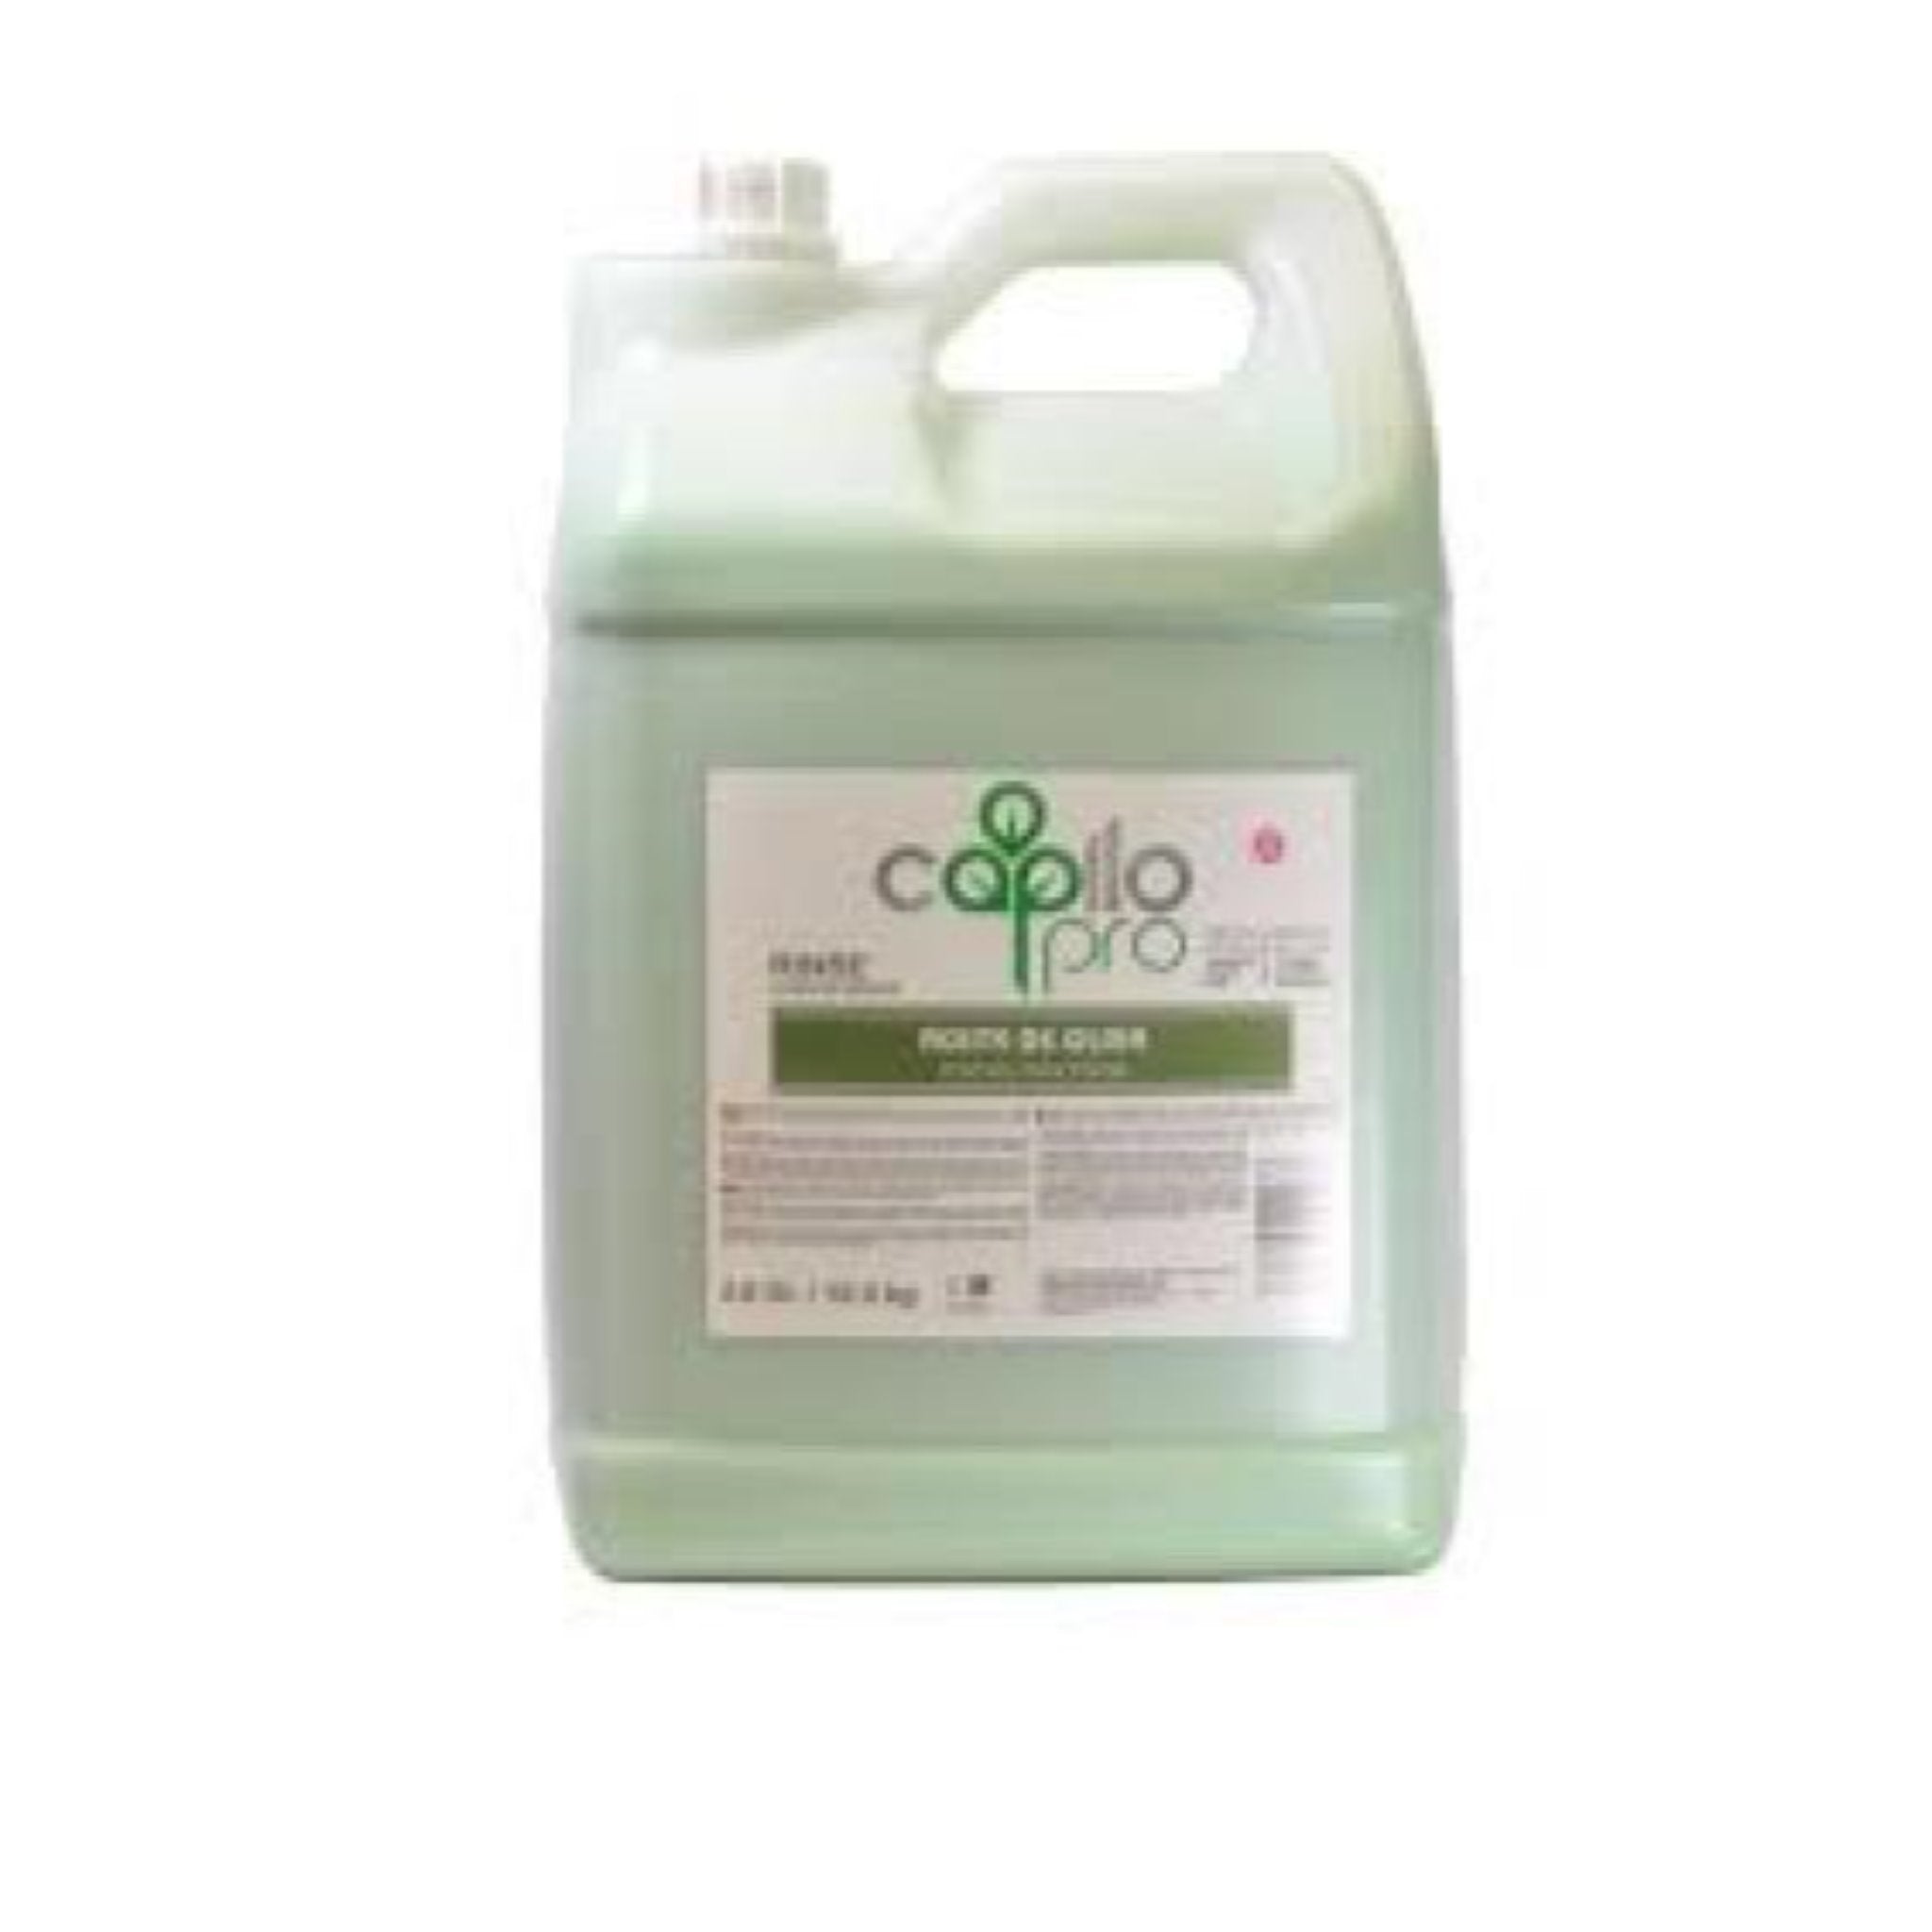 Capilo Olive Oil Rinse 2.8 GI